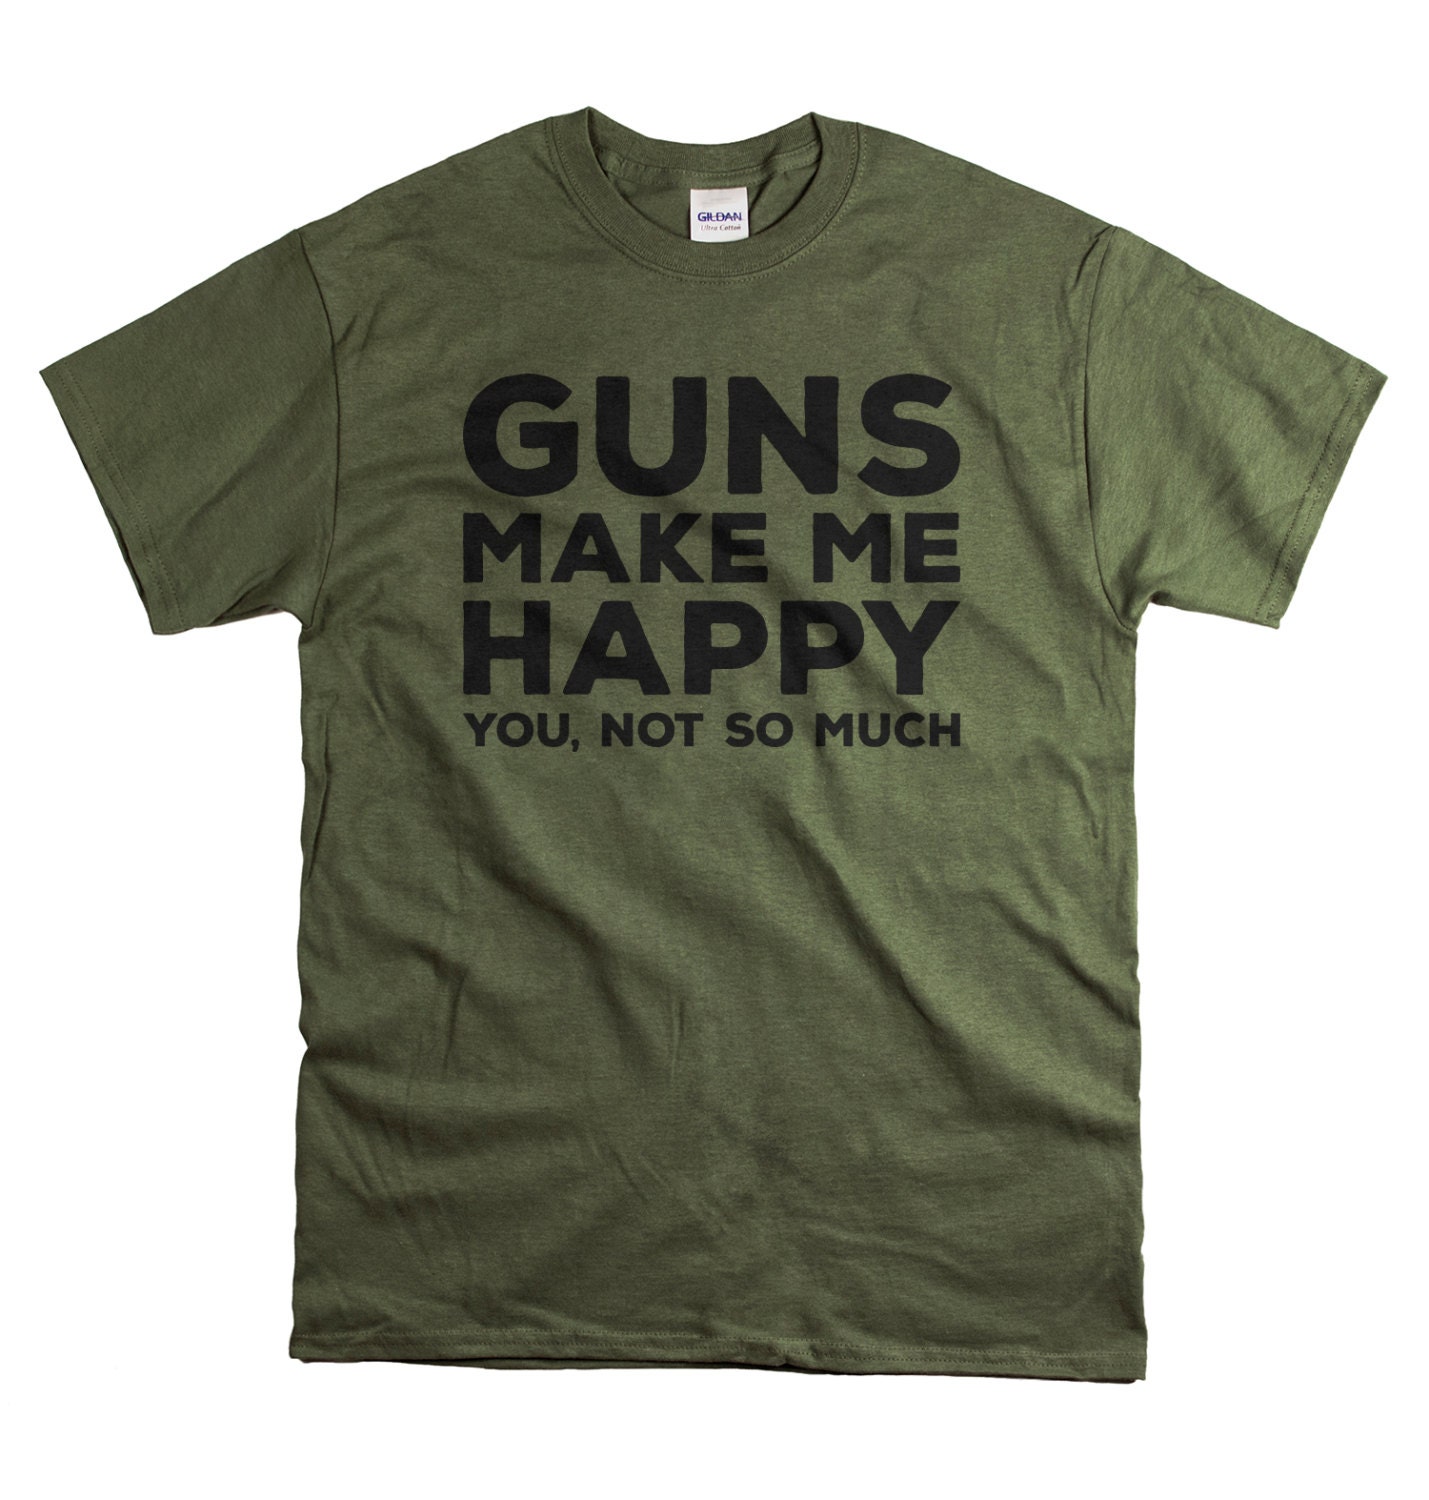 Daddy gun. T-Shirt Gun. Heroin makes Happy Shirt.